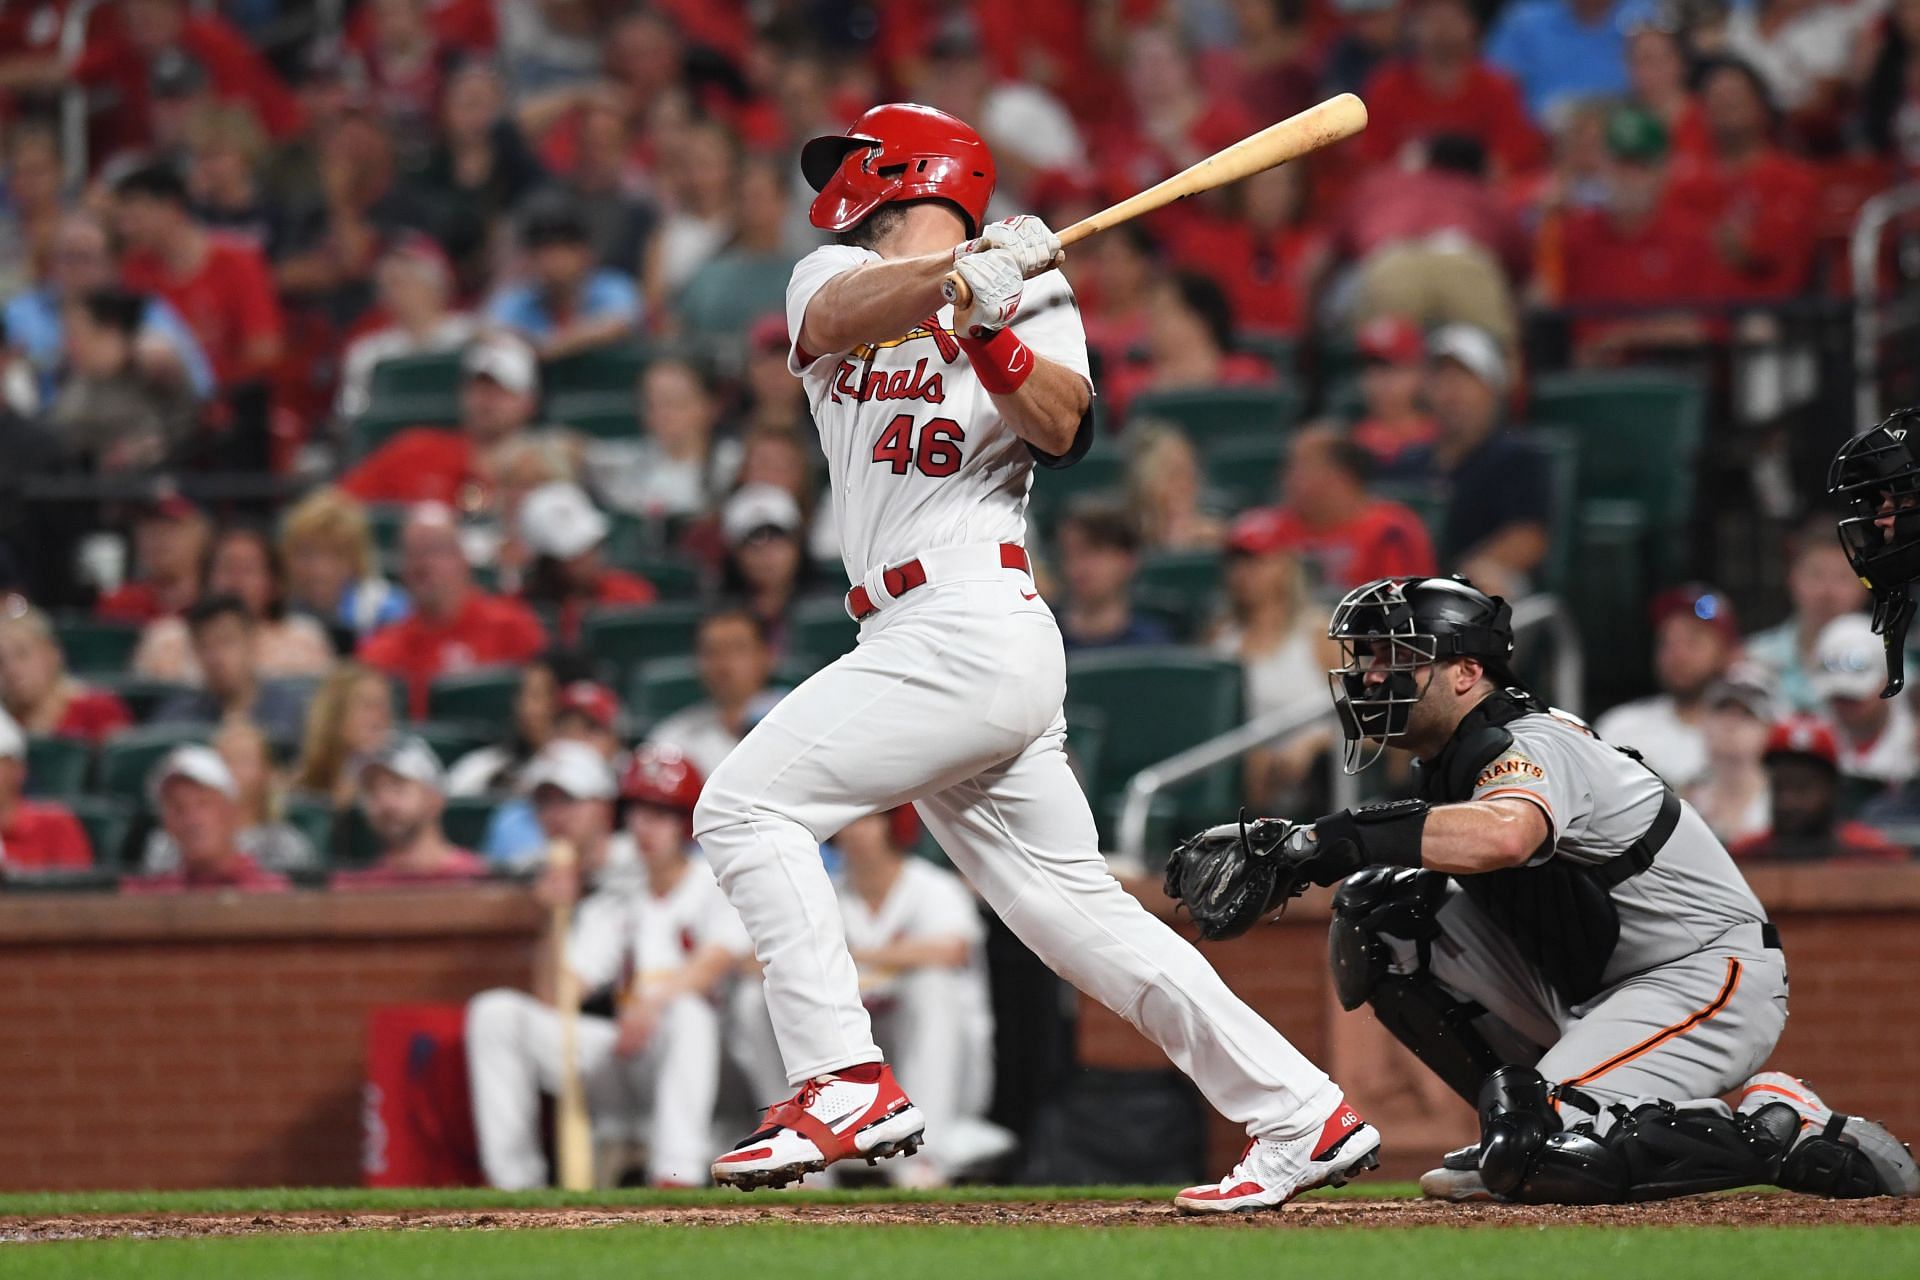 St. Louis Cardinals first baseman Paul Goldschmidt is batting .335 this season